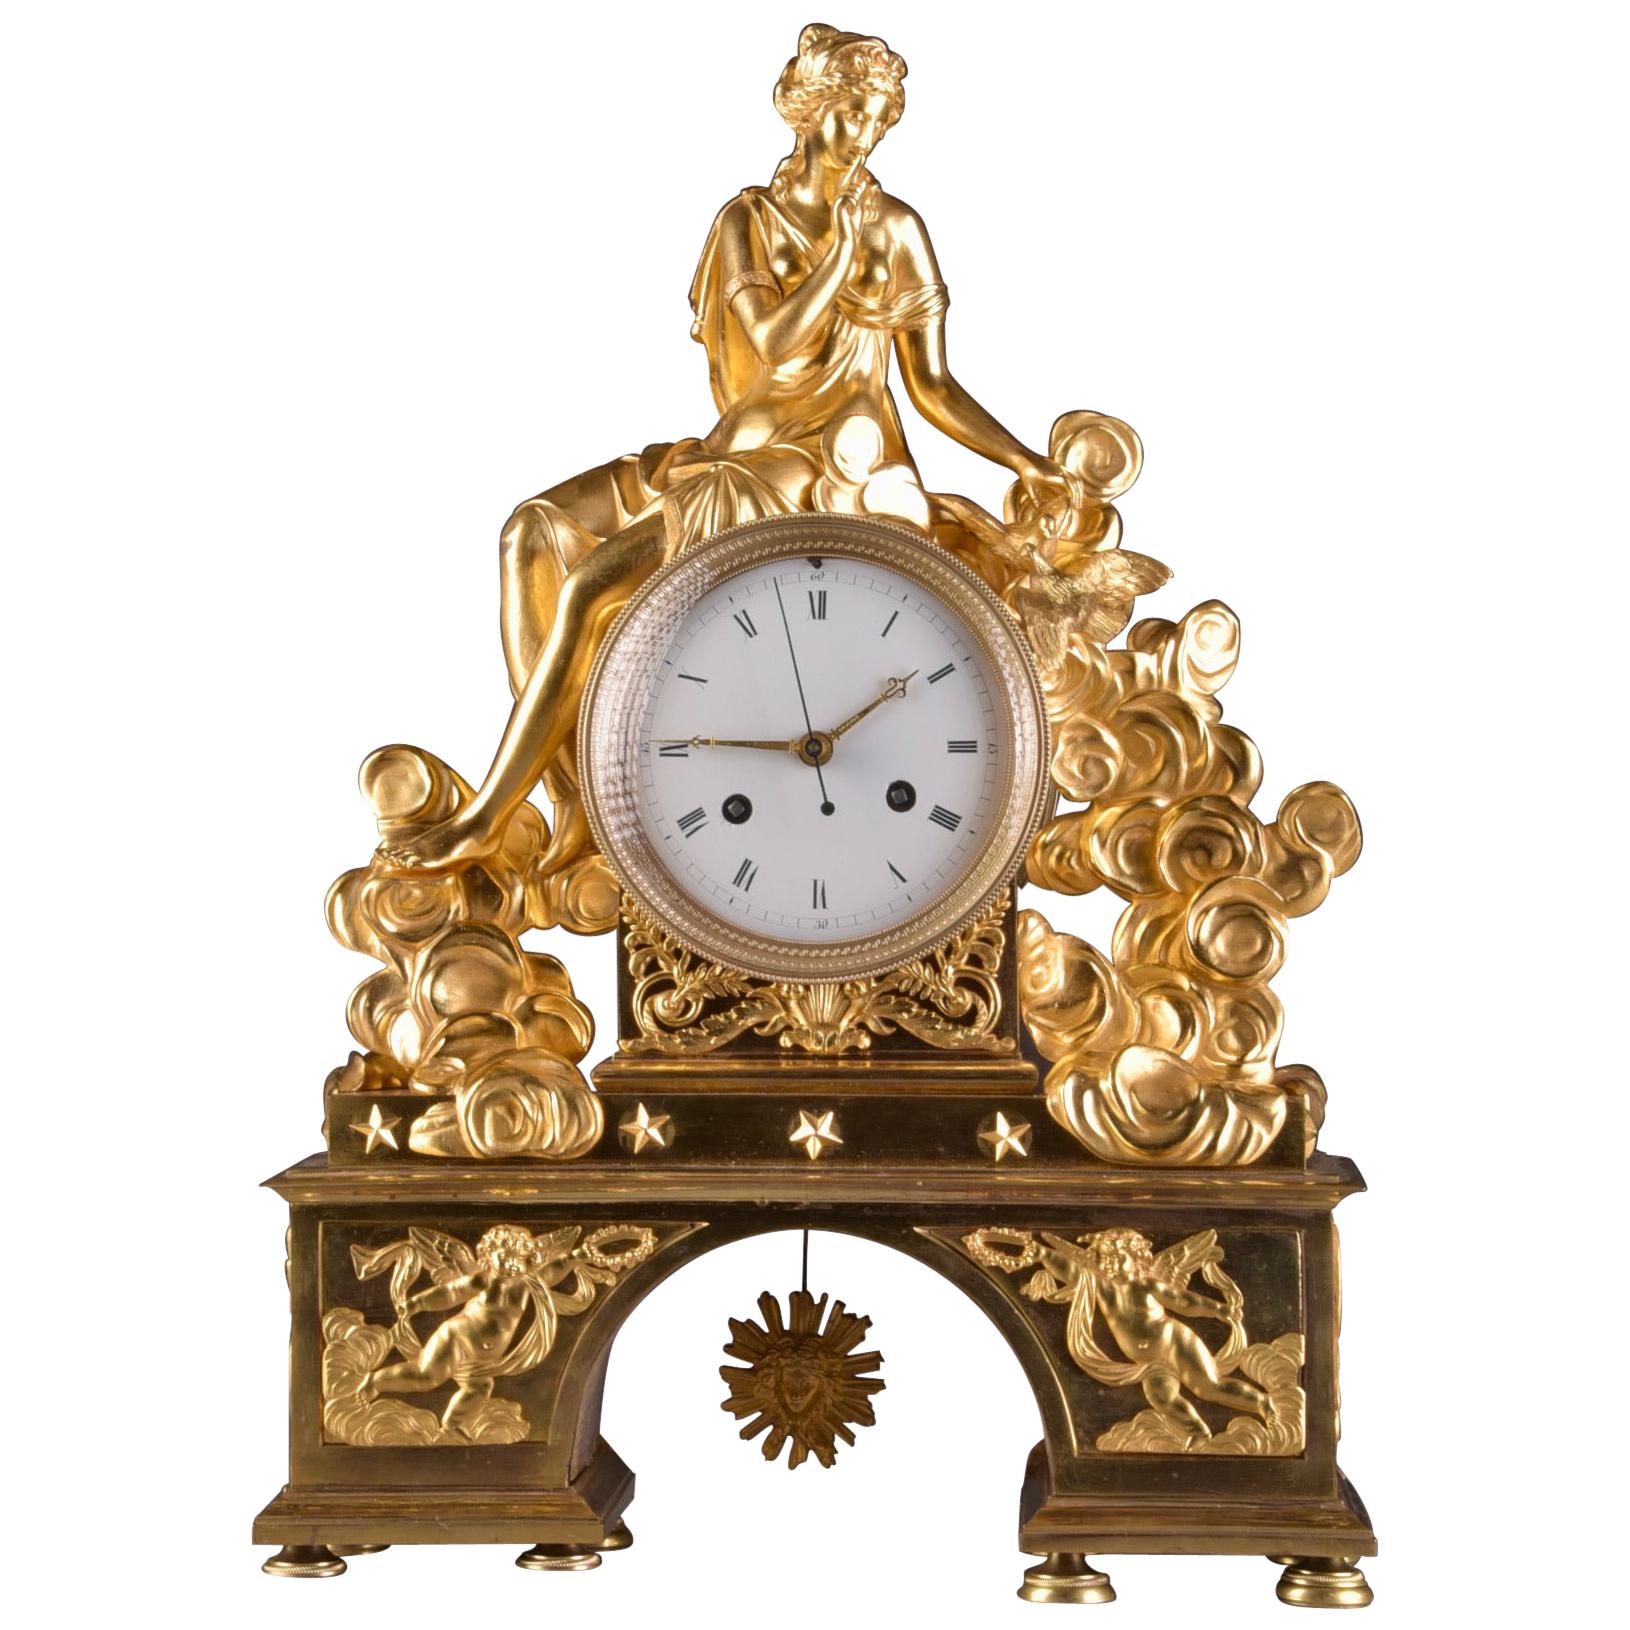 Rare Large Romantic French Directoire Mantel Clock, Late 18th C